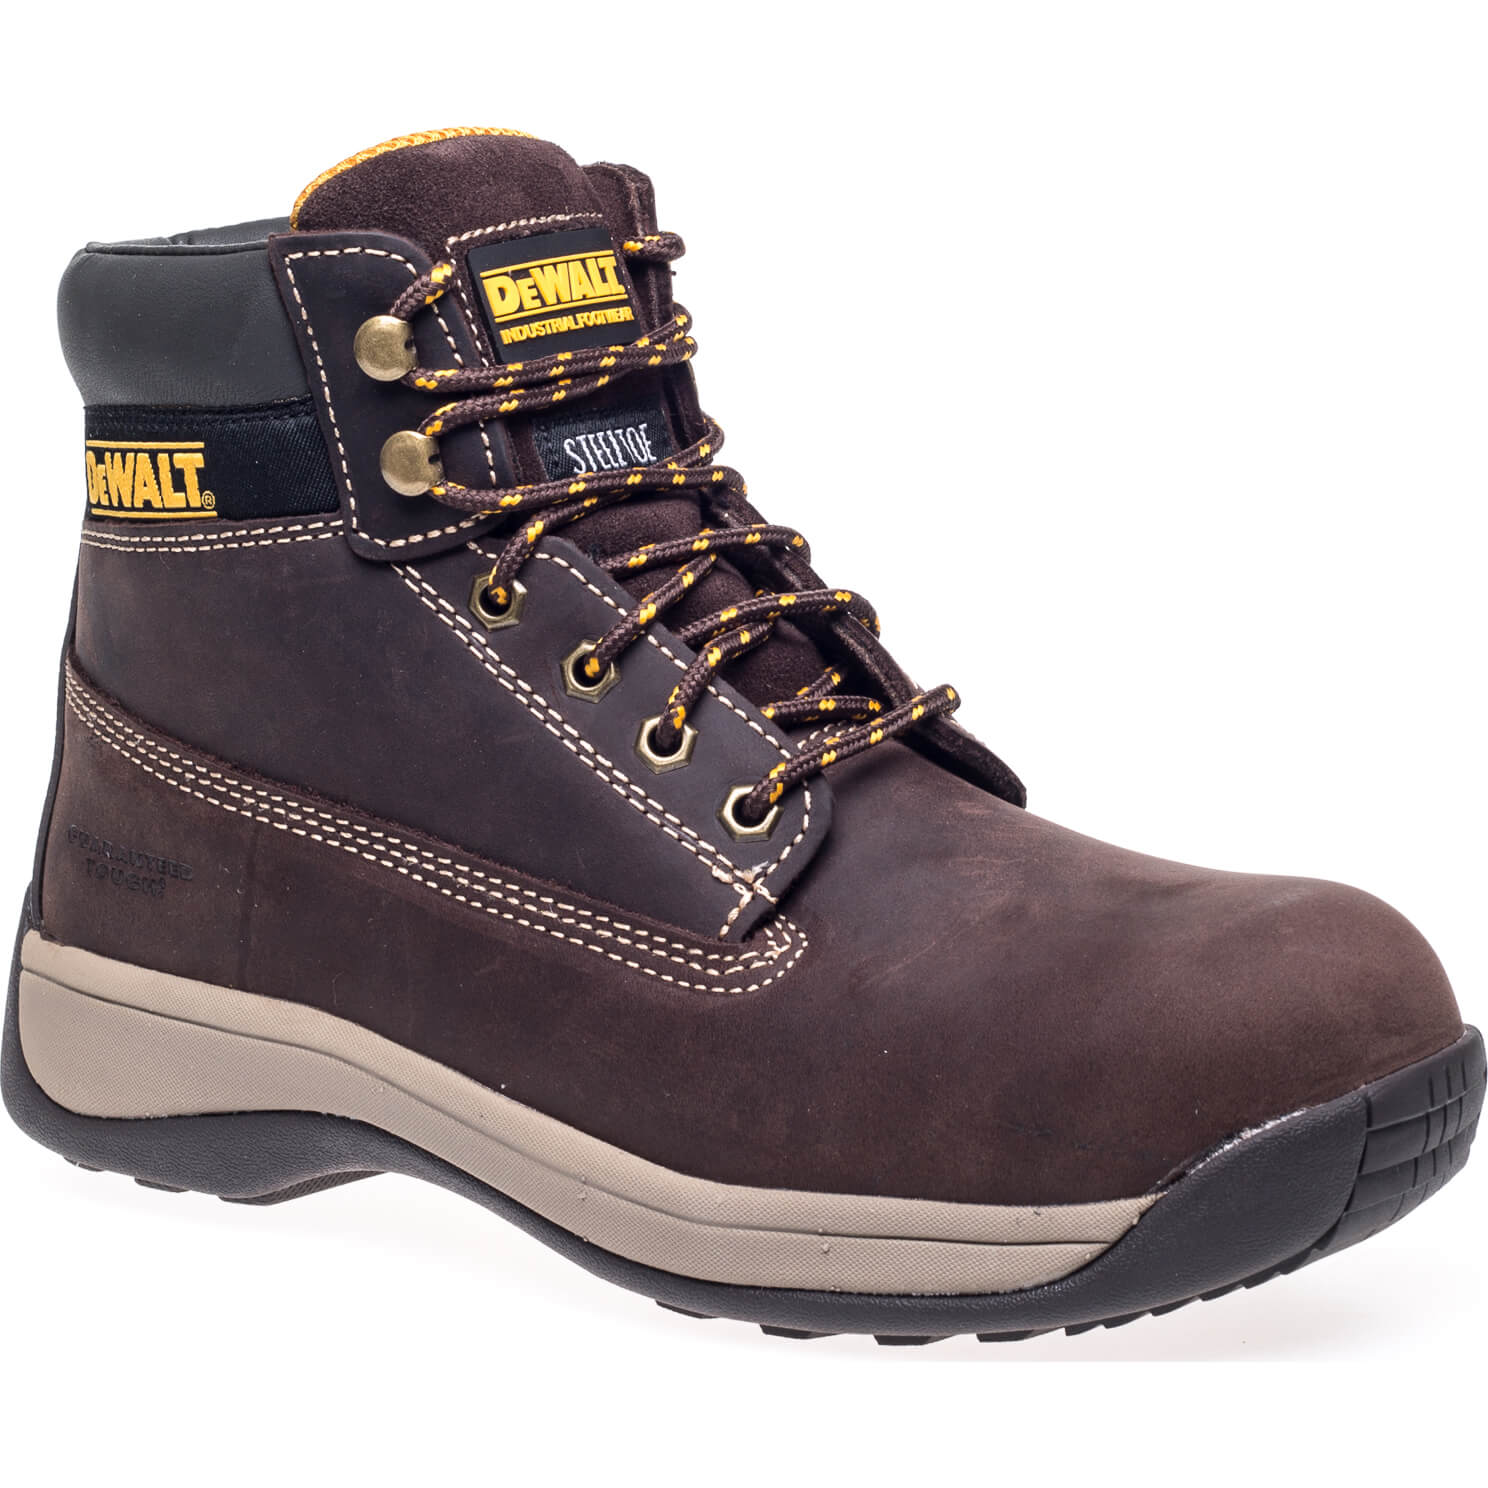 Photos - Safety Equipment DeWALT Apprentice Nubuck Safety Hiker Boots Brown Size 8 